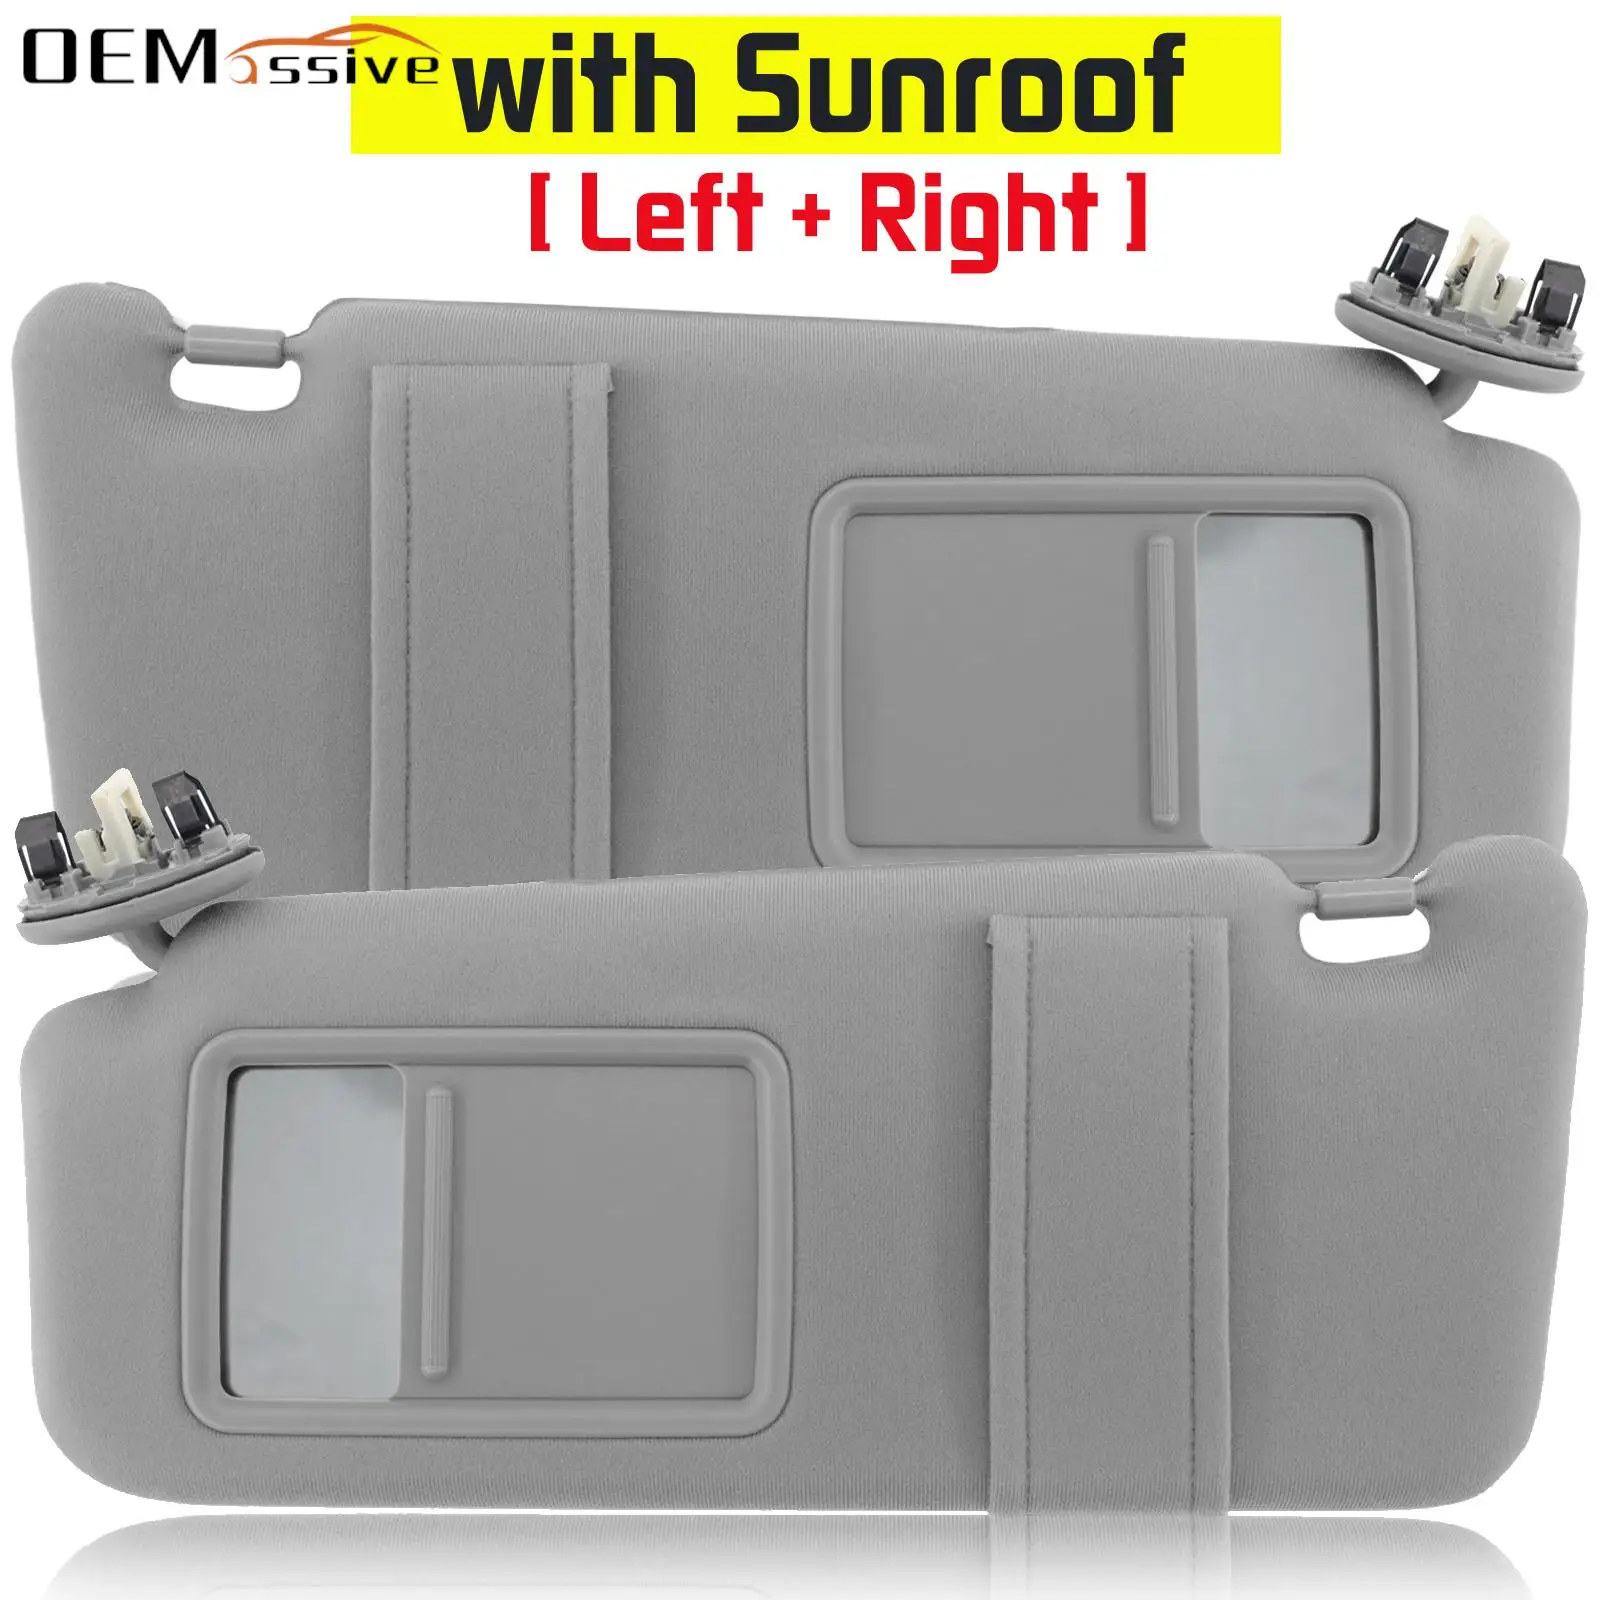 

Car LEFT RIGHT Sun Visor For Toyota Camry 2007 2008 2009 2010 2011 WITH Sunroof Gray Grey Sunshade Cover Shade Sunvisor Aurion 1